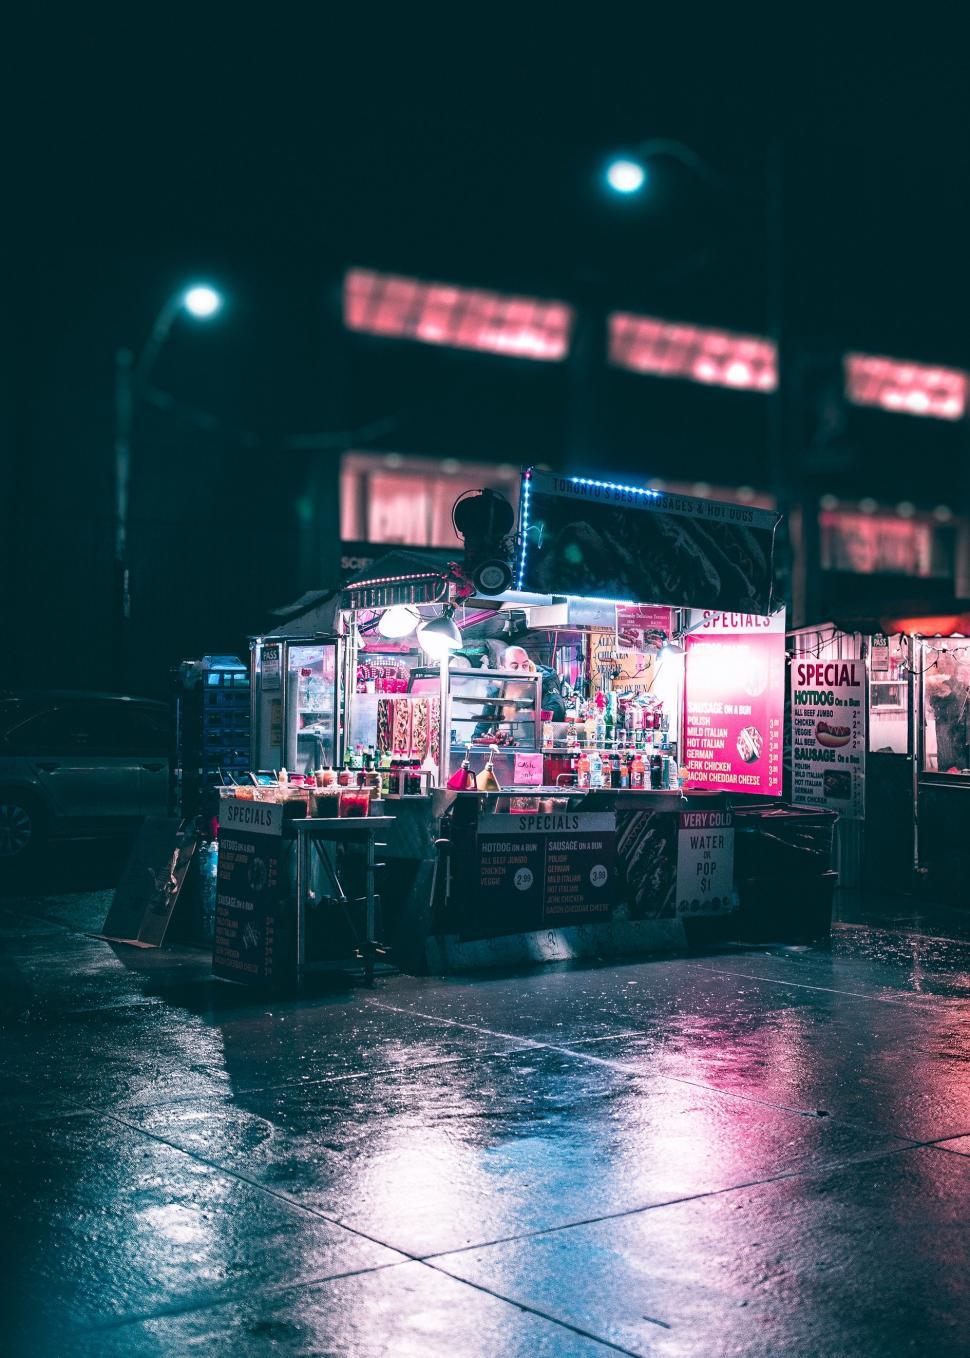 Free Image of Street Vendor Standing in Rain at Night 